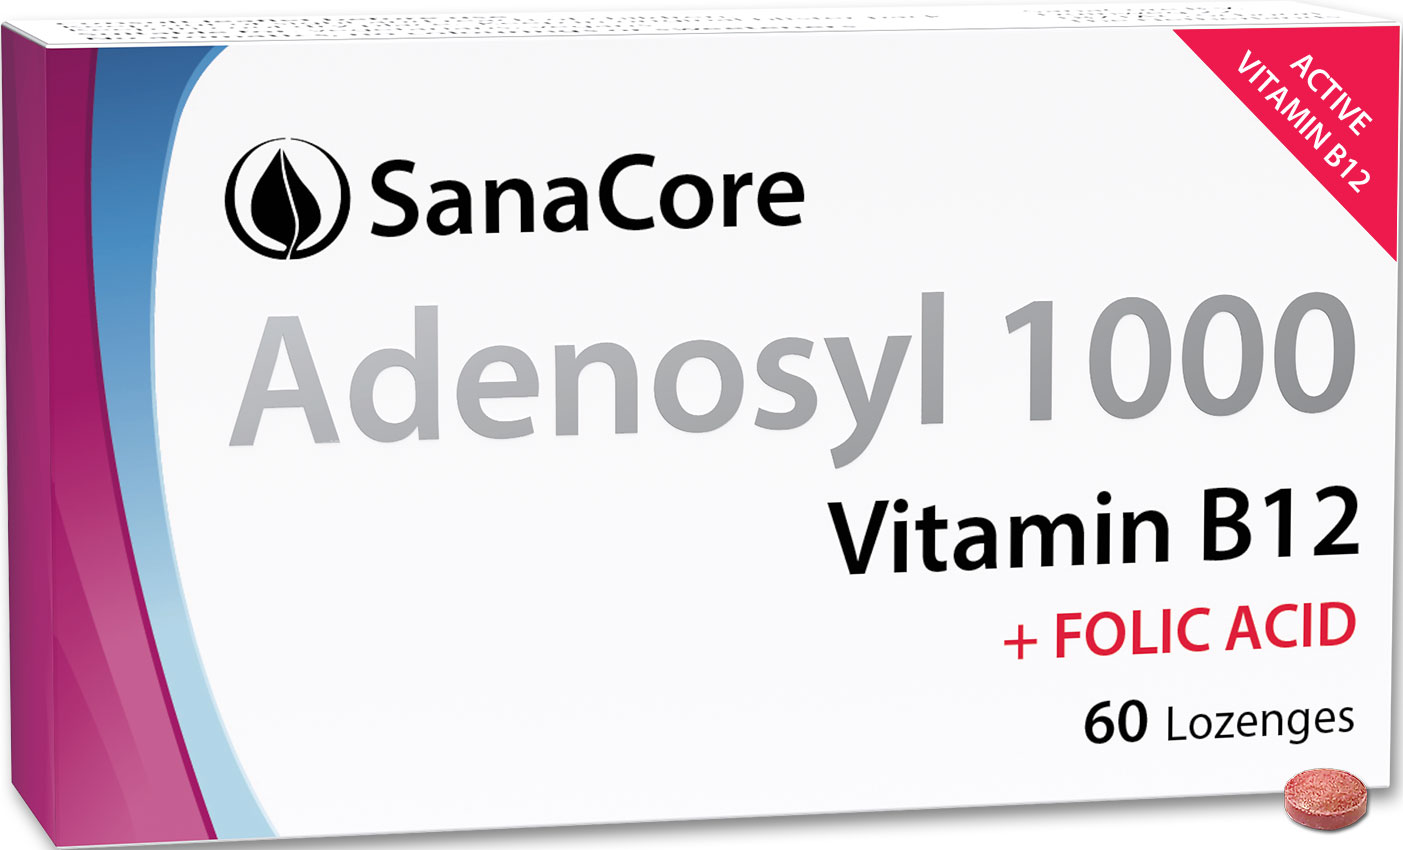 SanaCore Adenosyl 1000